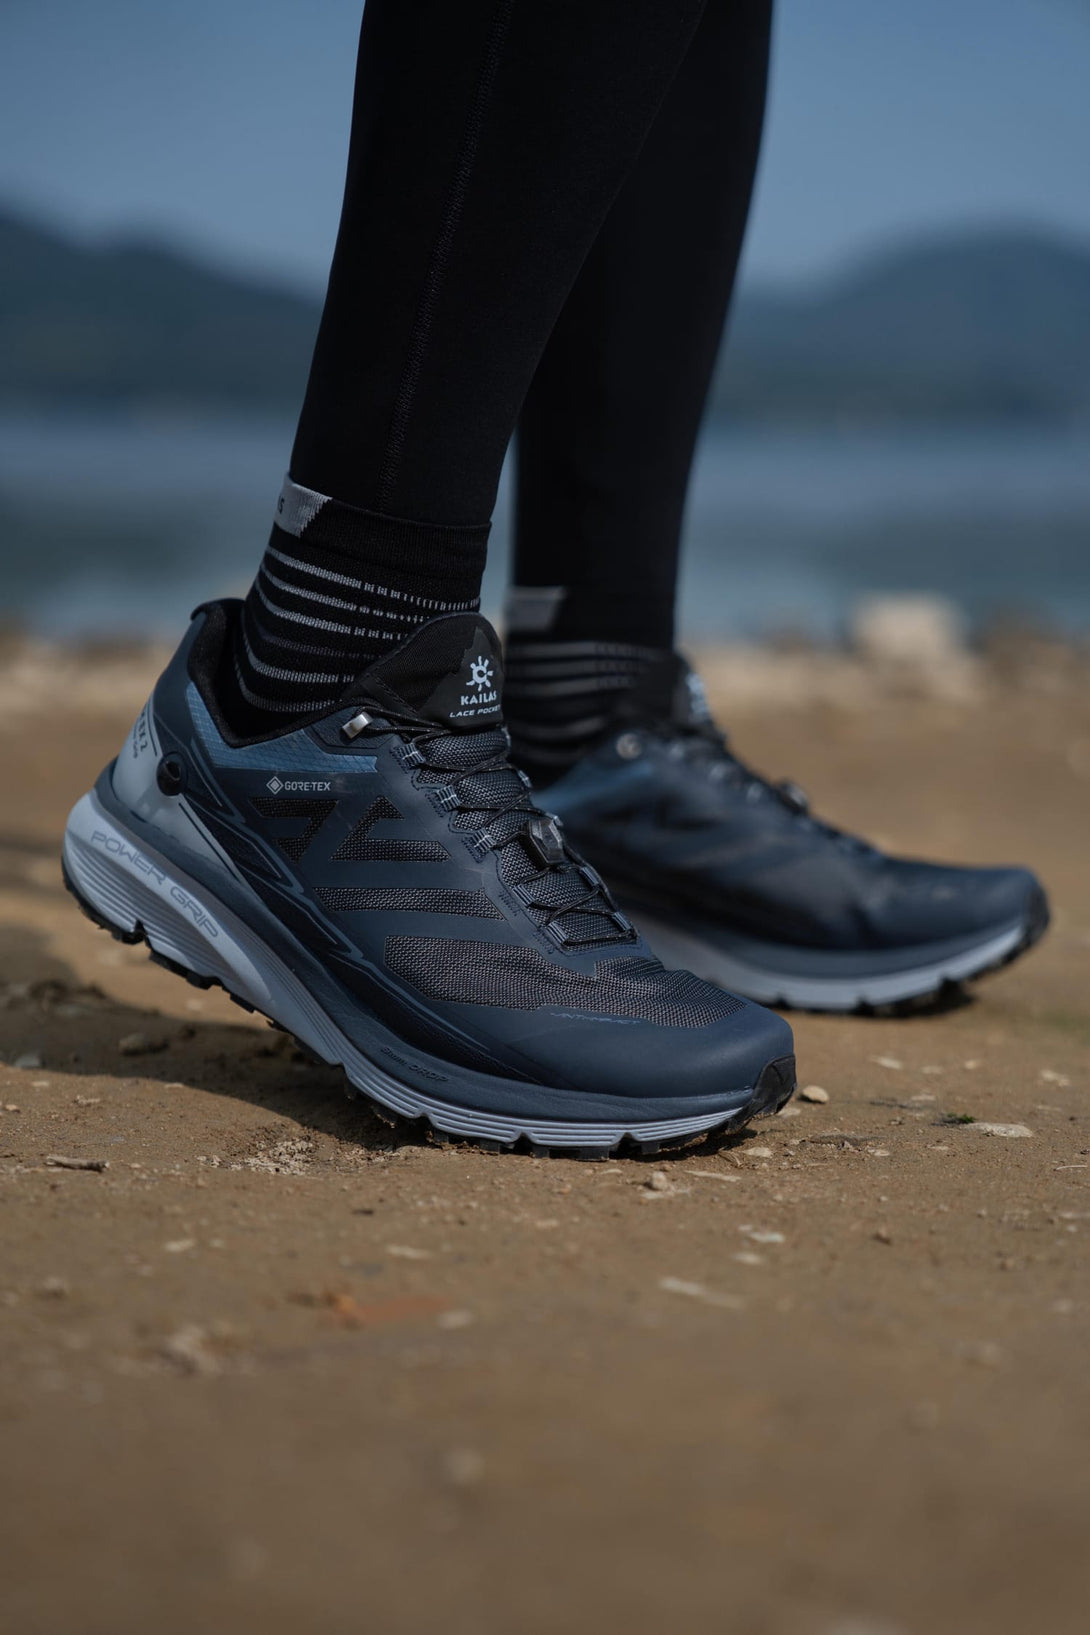 Kailas Fuga EX 2 GTX Waterproof Trail Running Shoes Men's